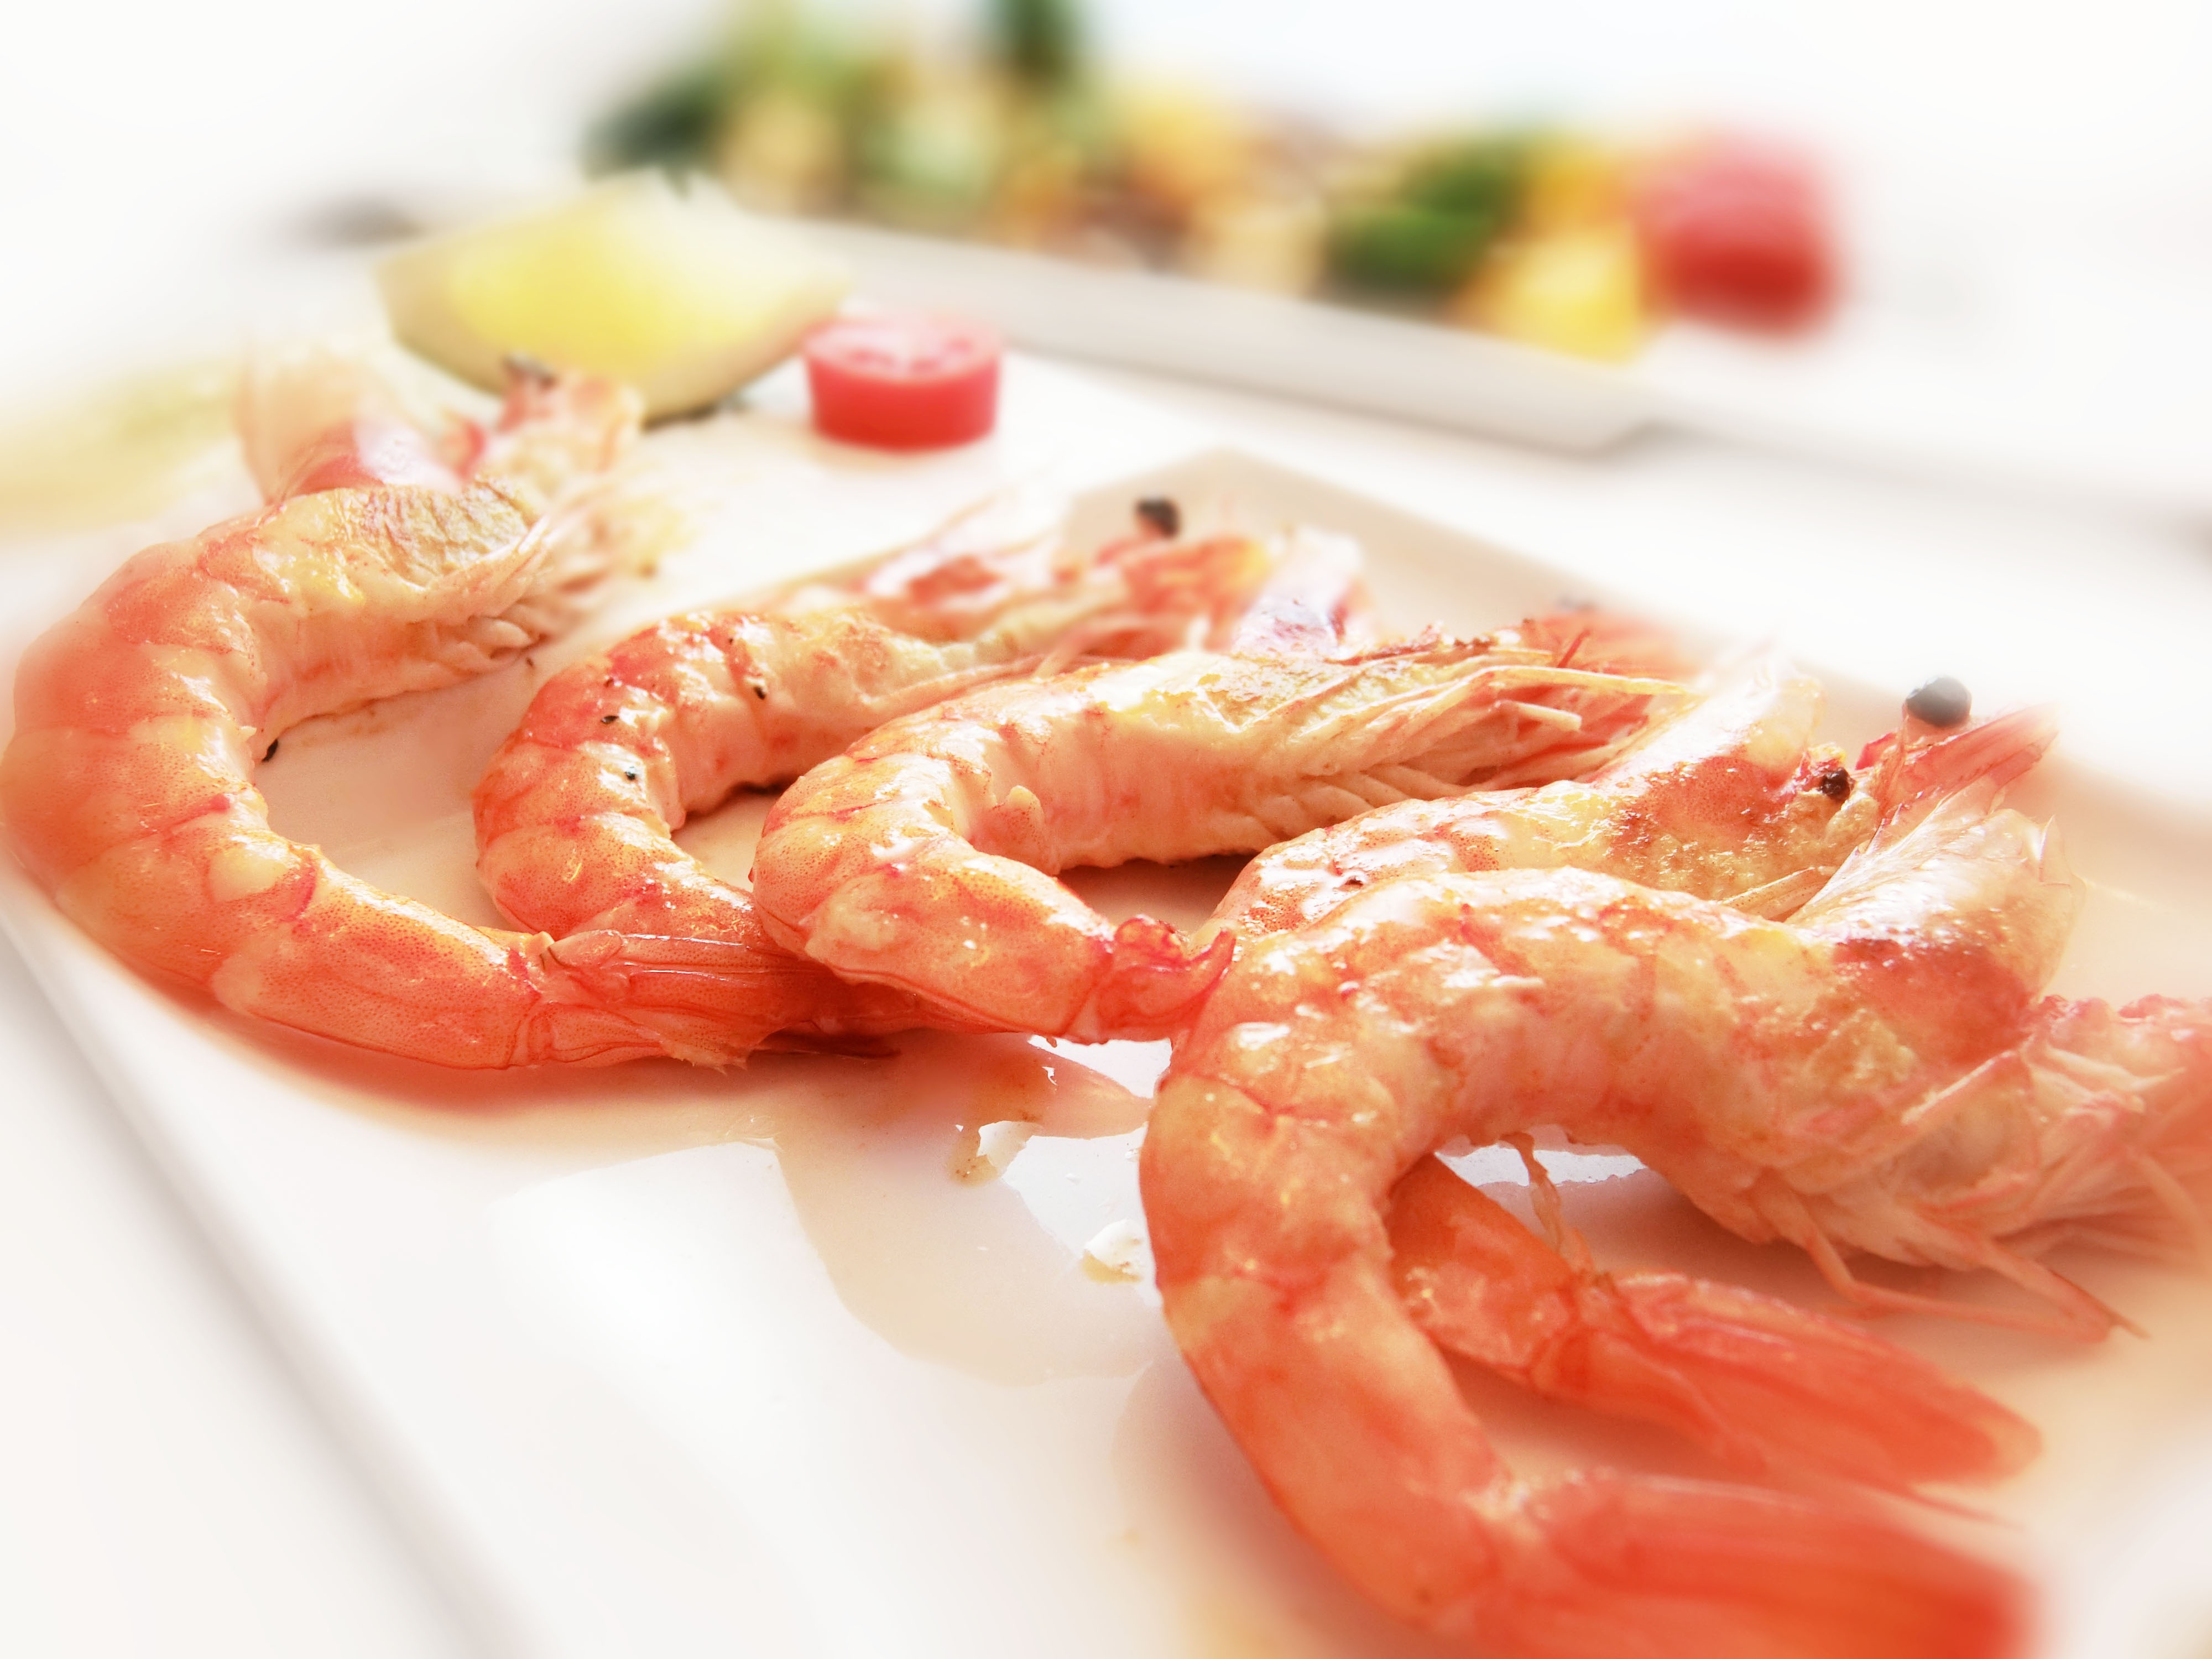 5 pieces cooked shrimps